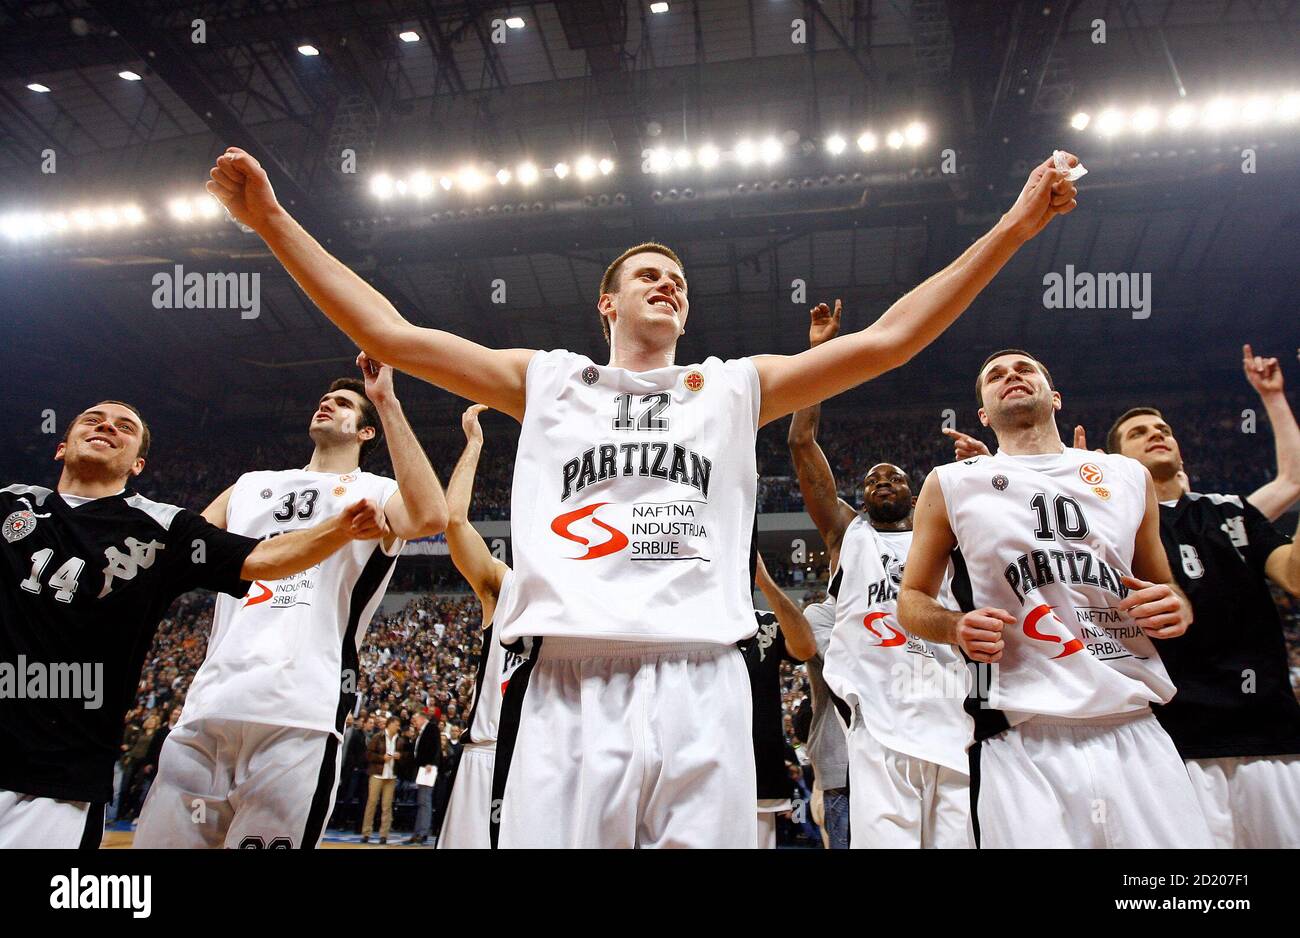 Partizan Belgrade players celebrate their victory over Panathinaikos after  their Euroleague basketball game in Belgrade March 5, 2009. REUTERS/Marko  Djurica (SERBIA Stock Photo - Alamy